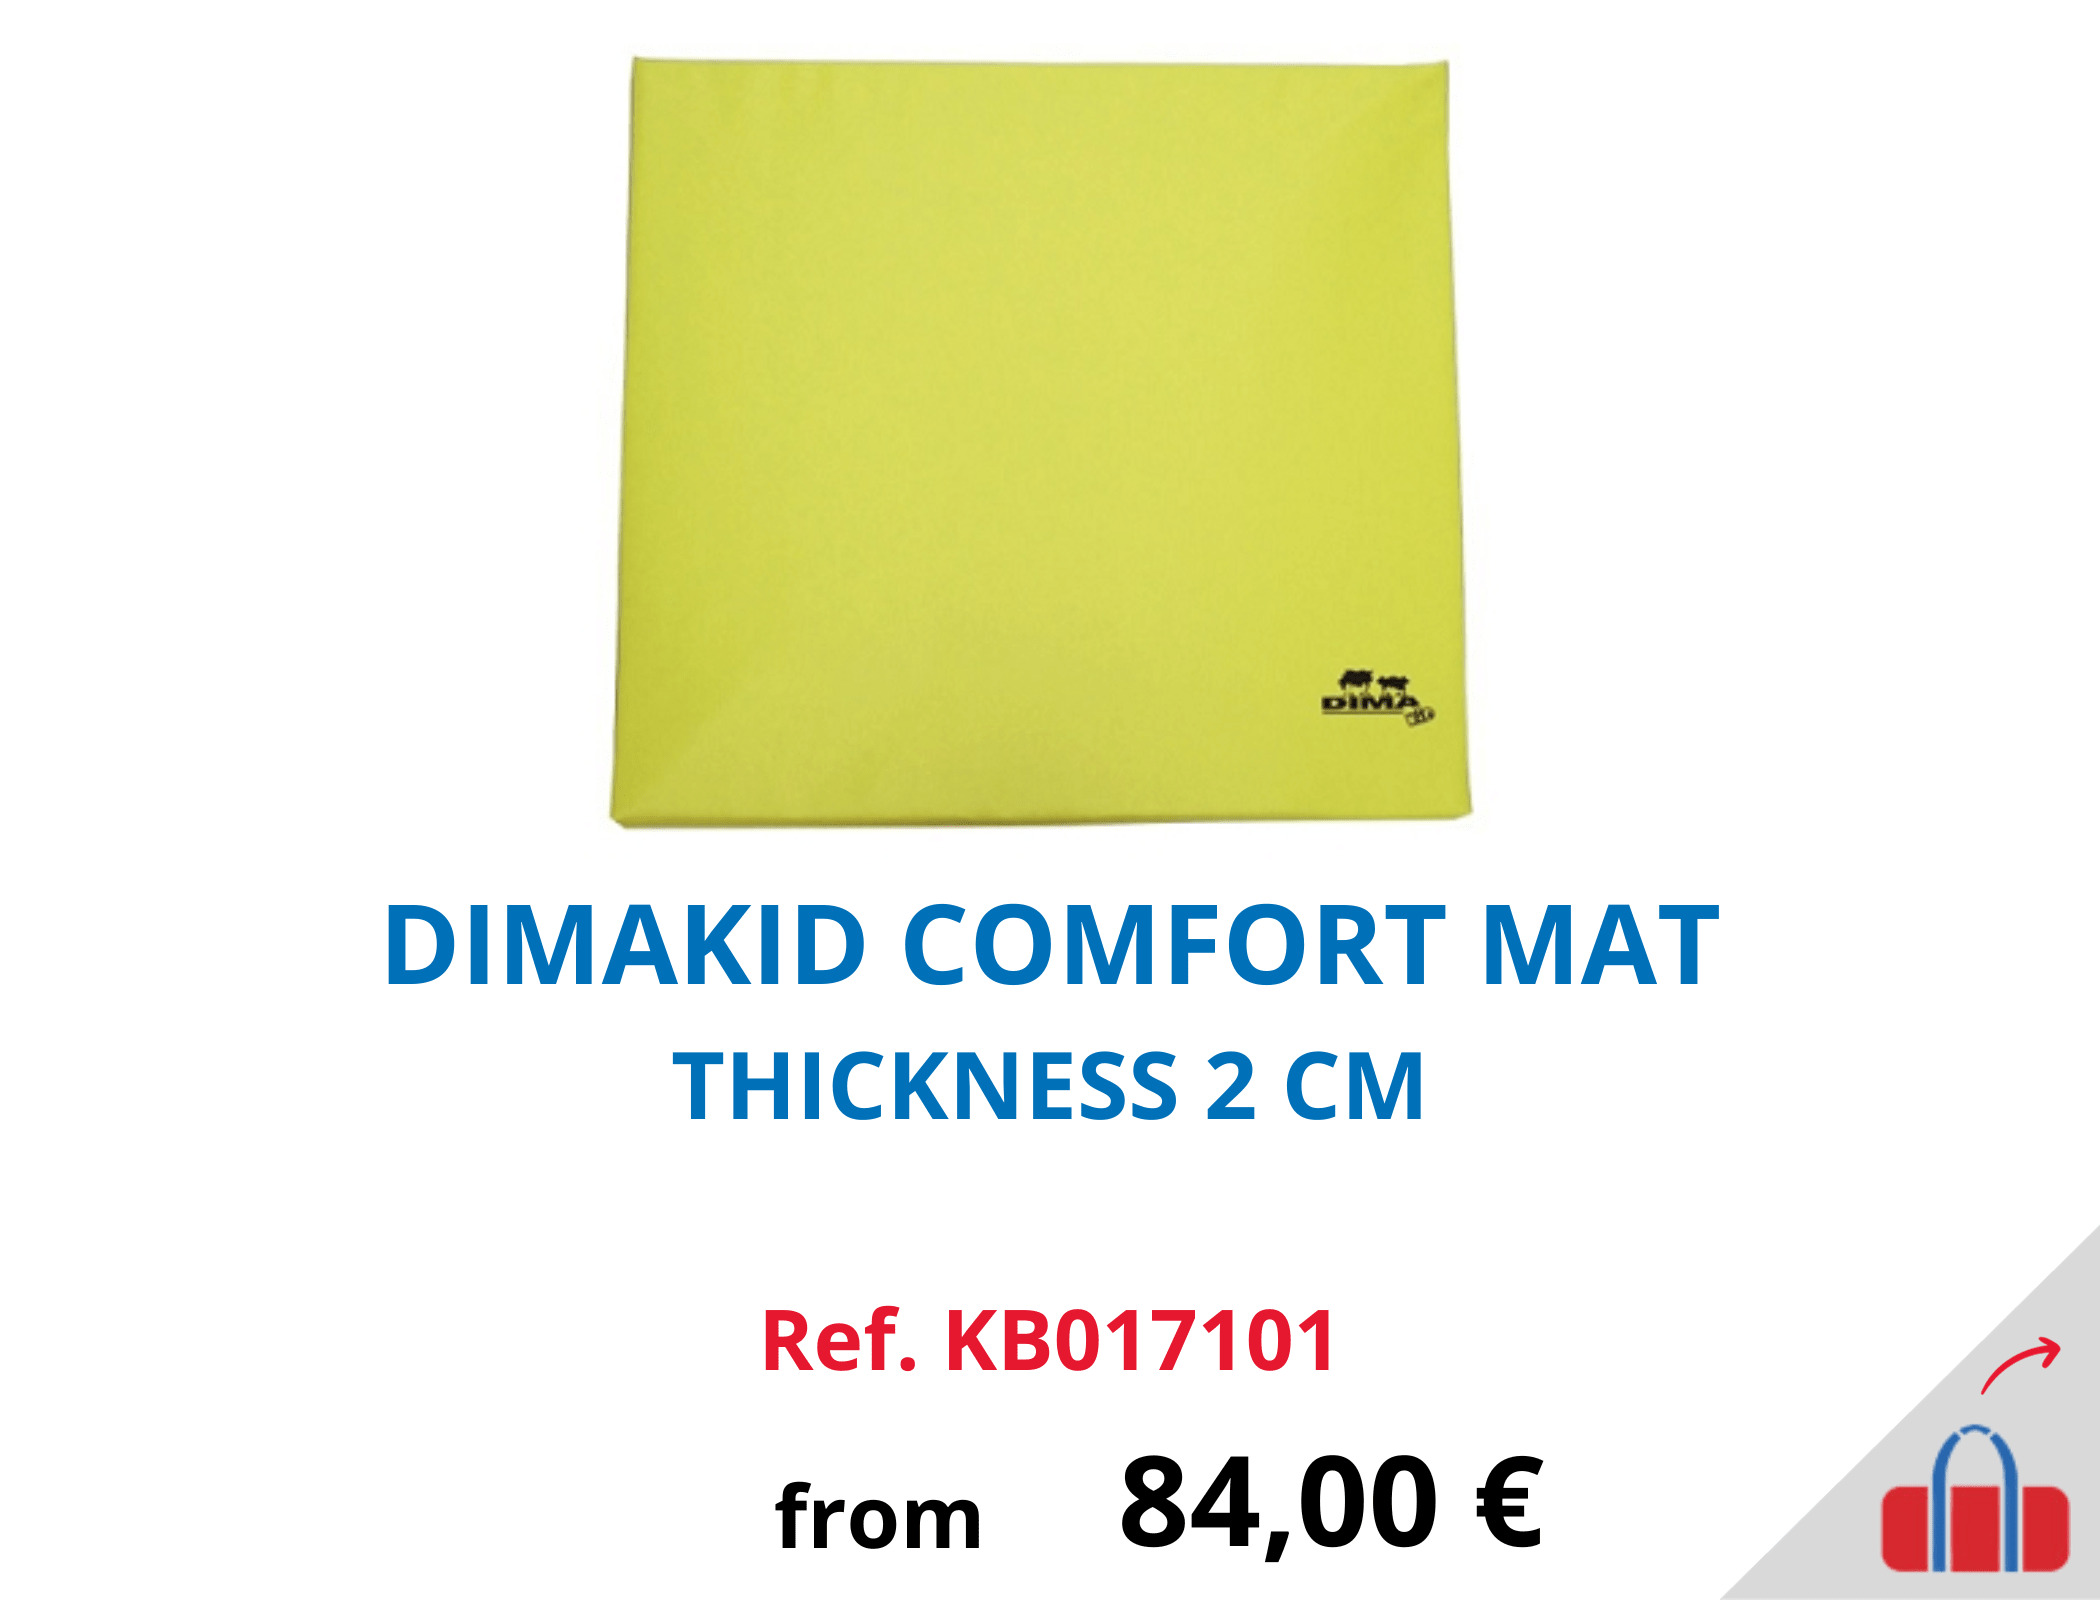 Dimakid comfort mat